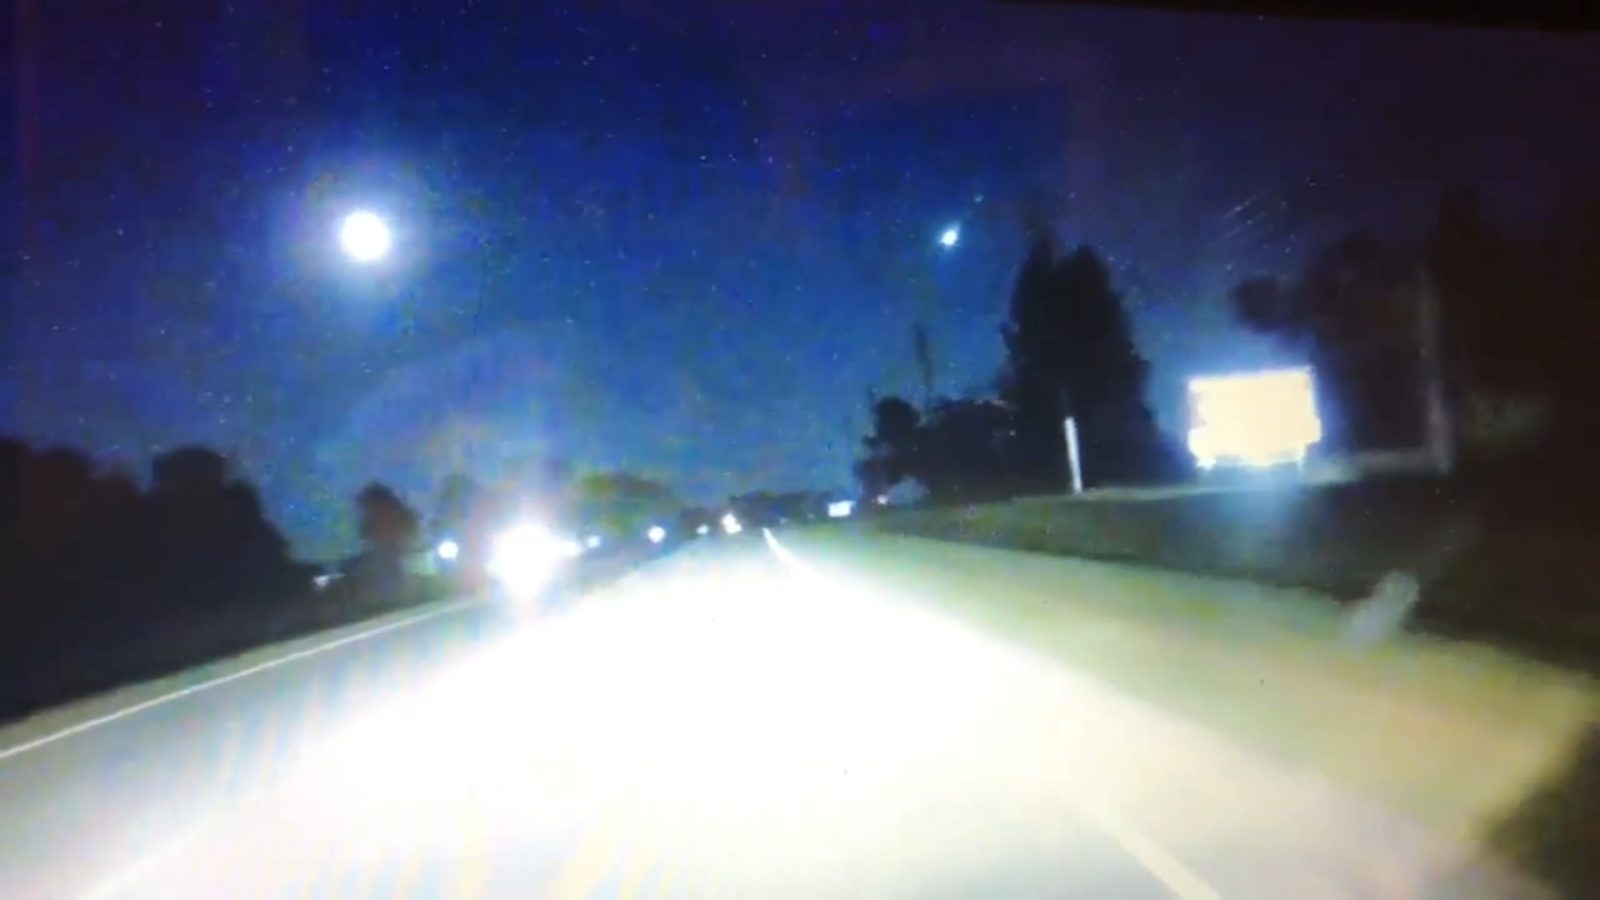 A car dashcam recorded a fireball streaking across the night sky in North Carolina.